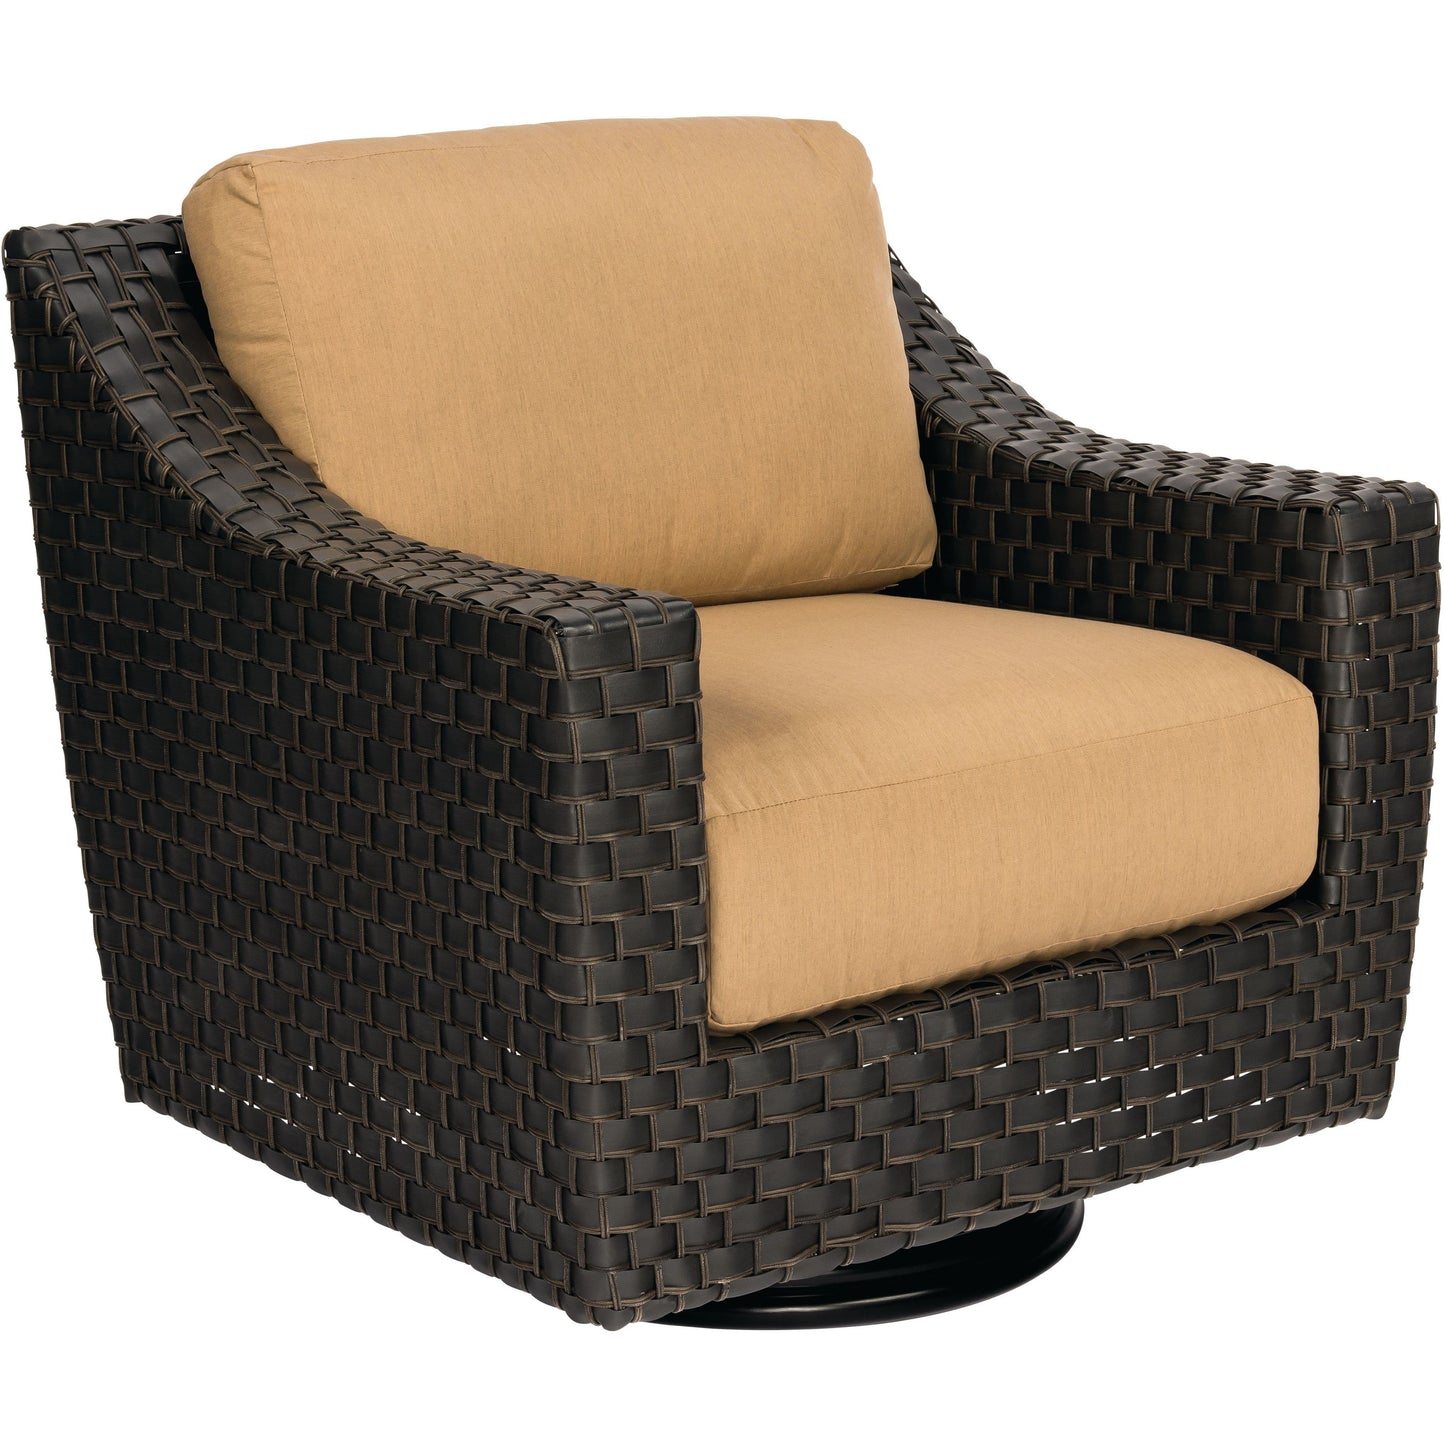 Swivel Lounge Chair S640015 Woodard Outdoor Patio | Cooper Collection Seating Woodard 